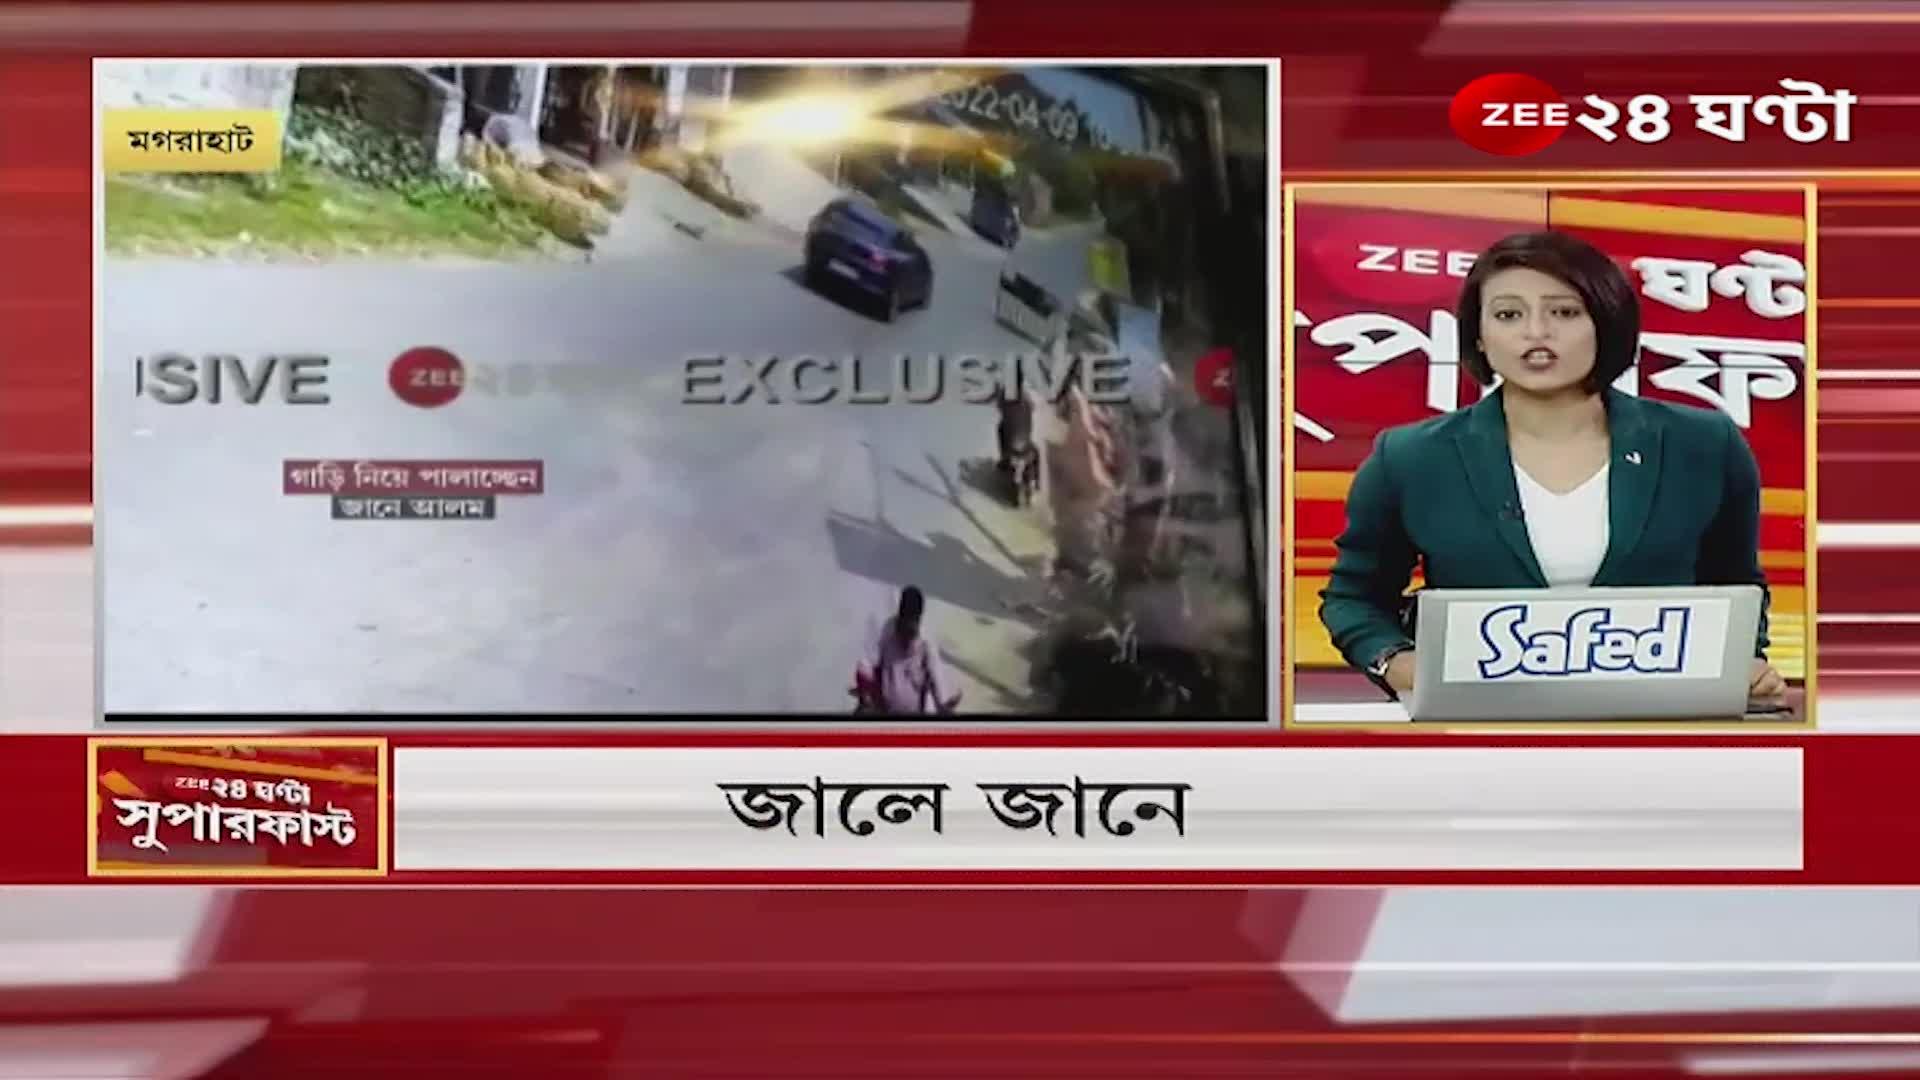 Zee 24 Ghanta Superfast speed news | Bengali News | Latest Update